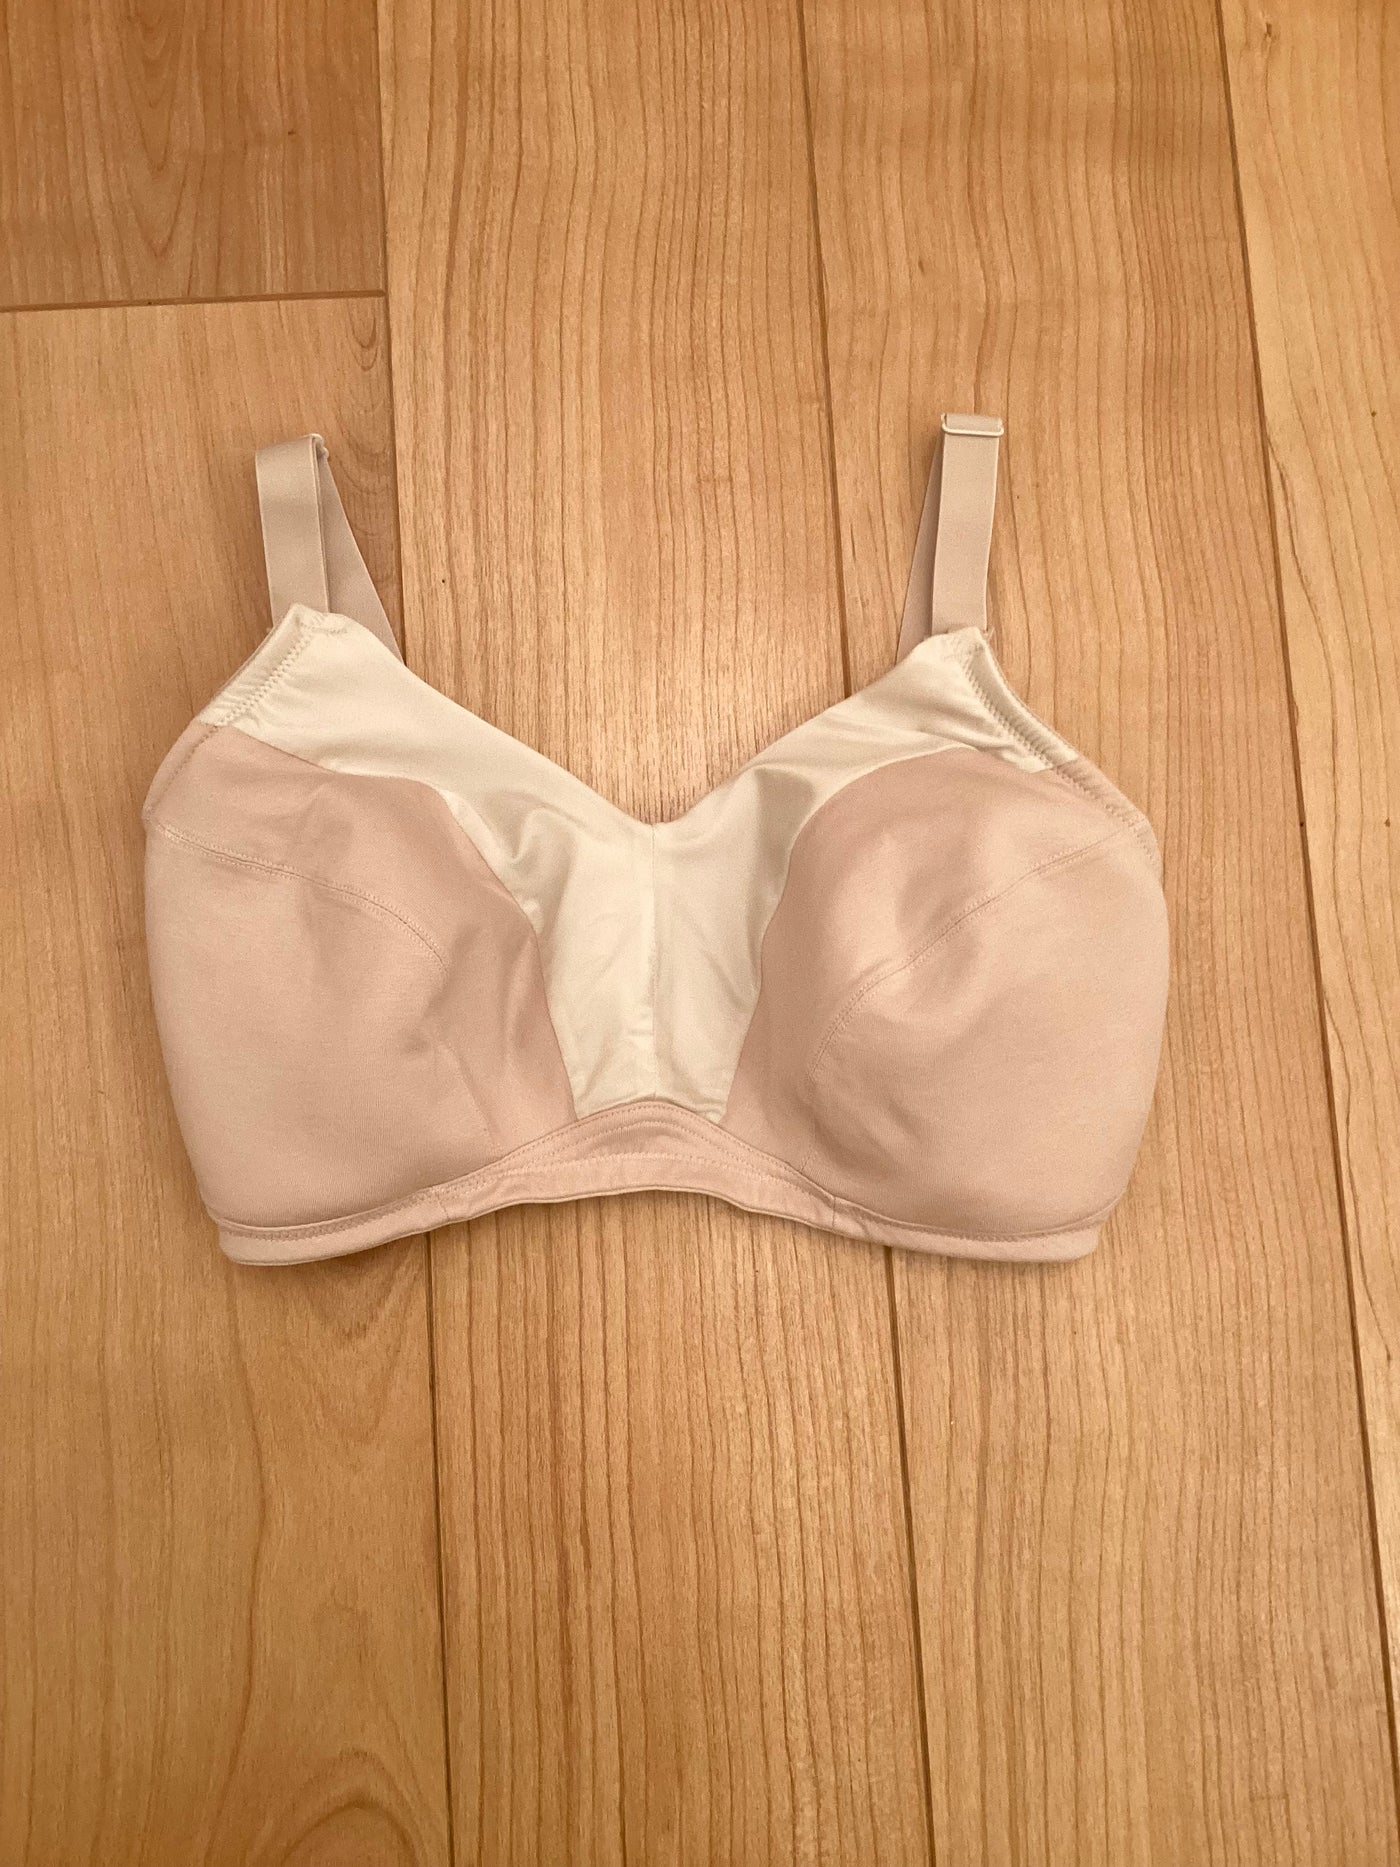 M&S Mum nude 2 tone nursing bra - Size 36F